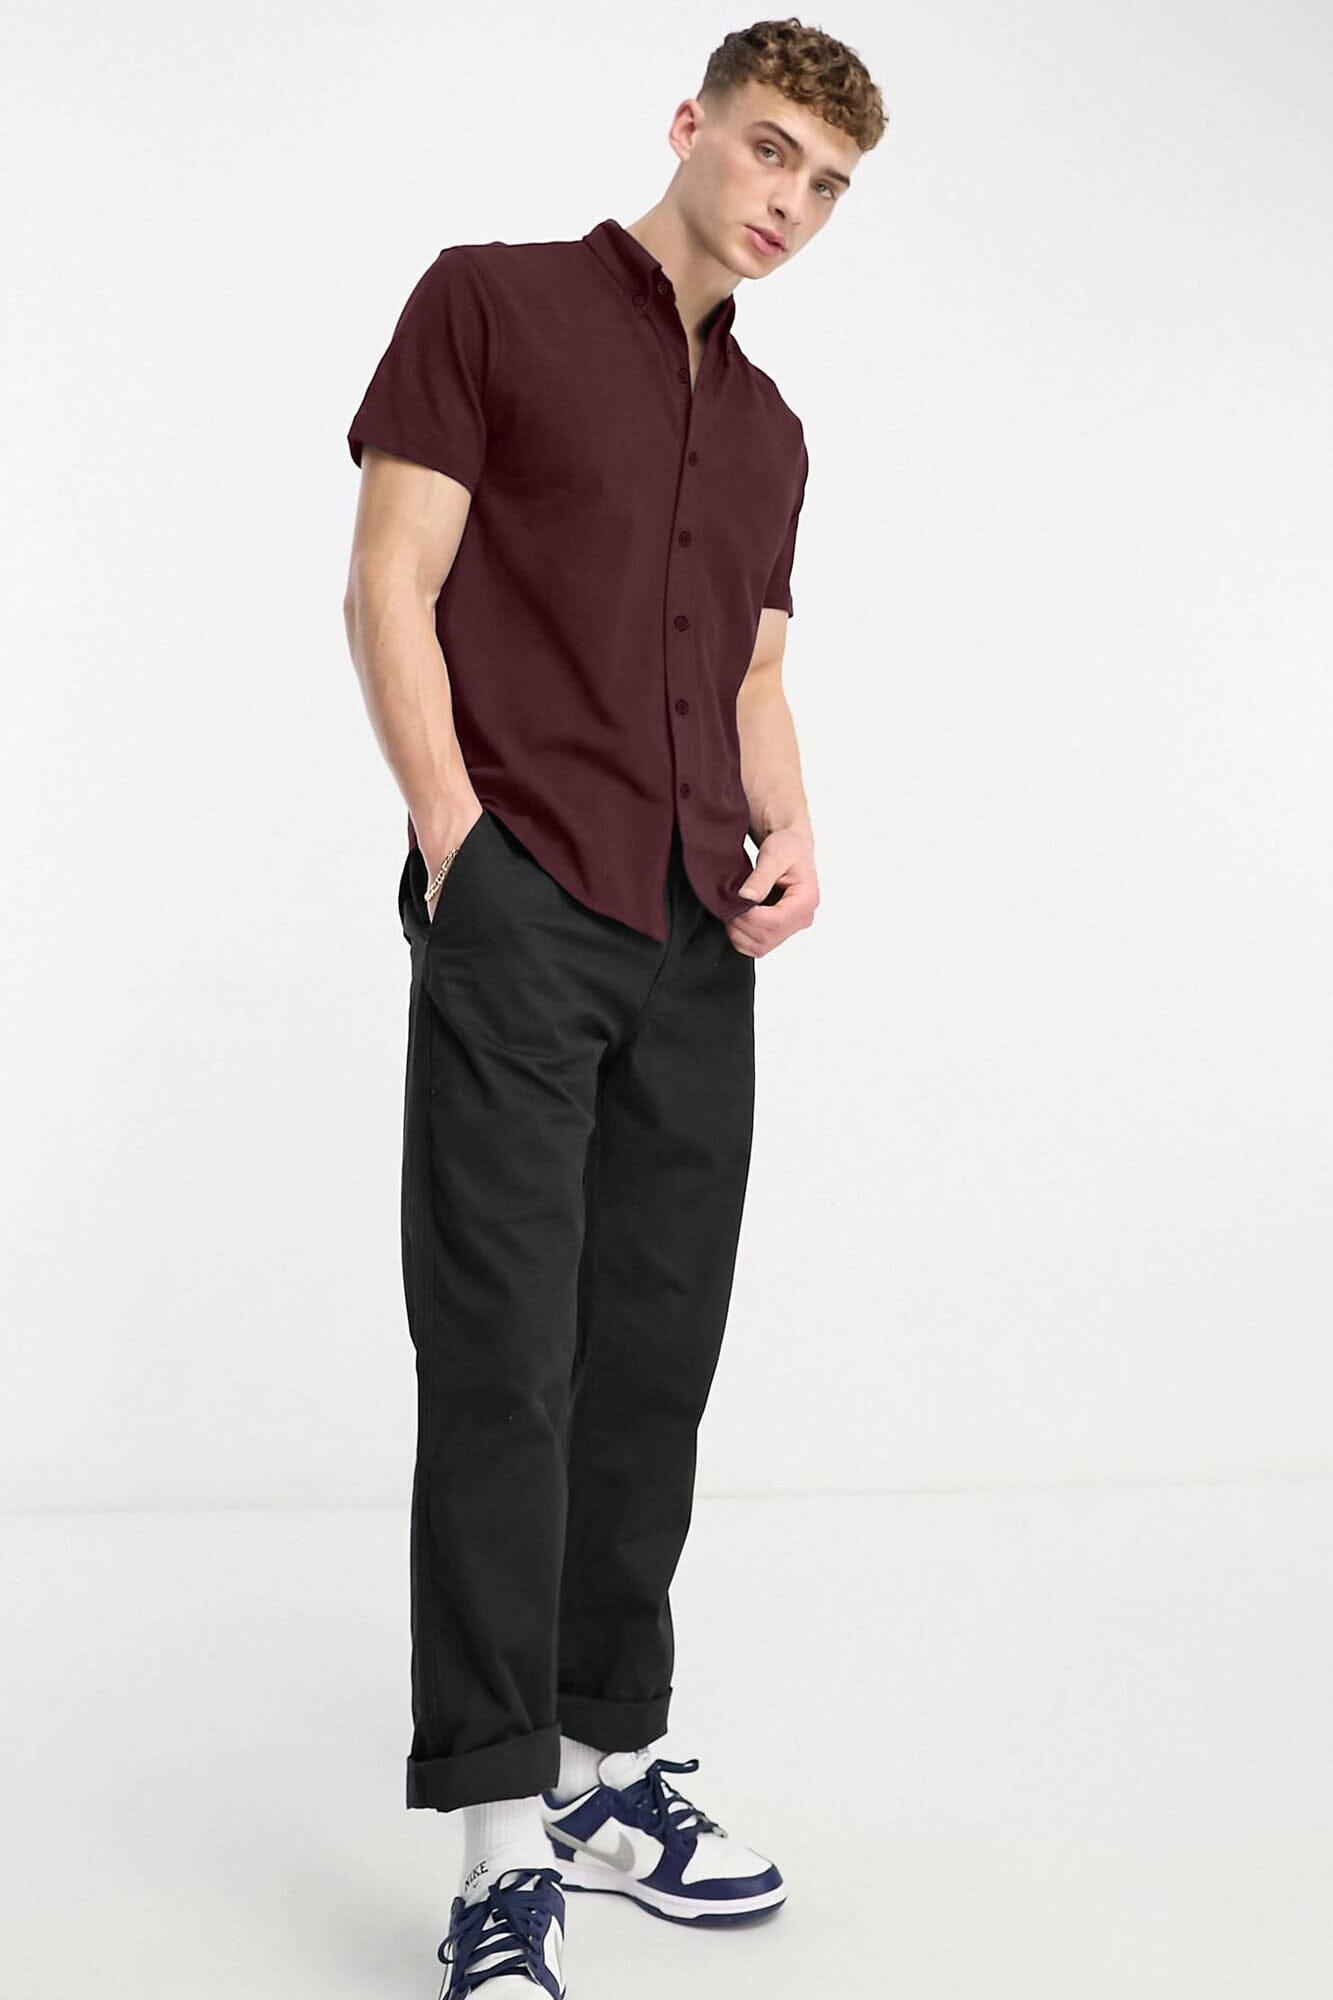 Polo Republica Men's Essentials Short Sleeve Pique Casual Shirt Men's Casual Shirt Polo Republica Maroon S 